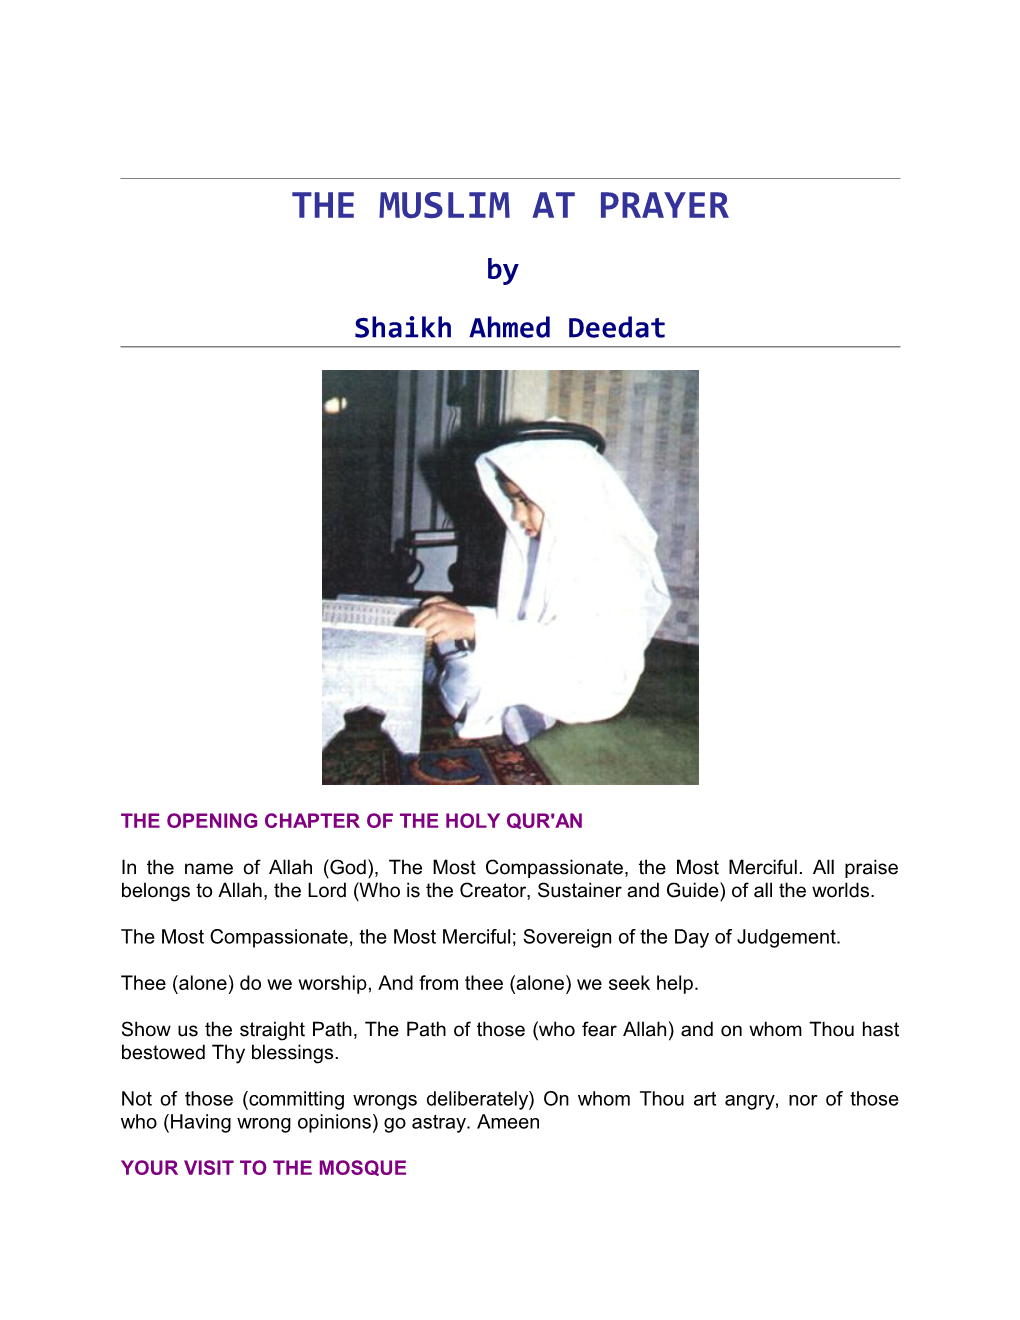 The Muslim at Prayer